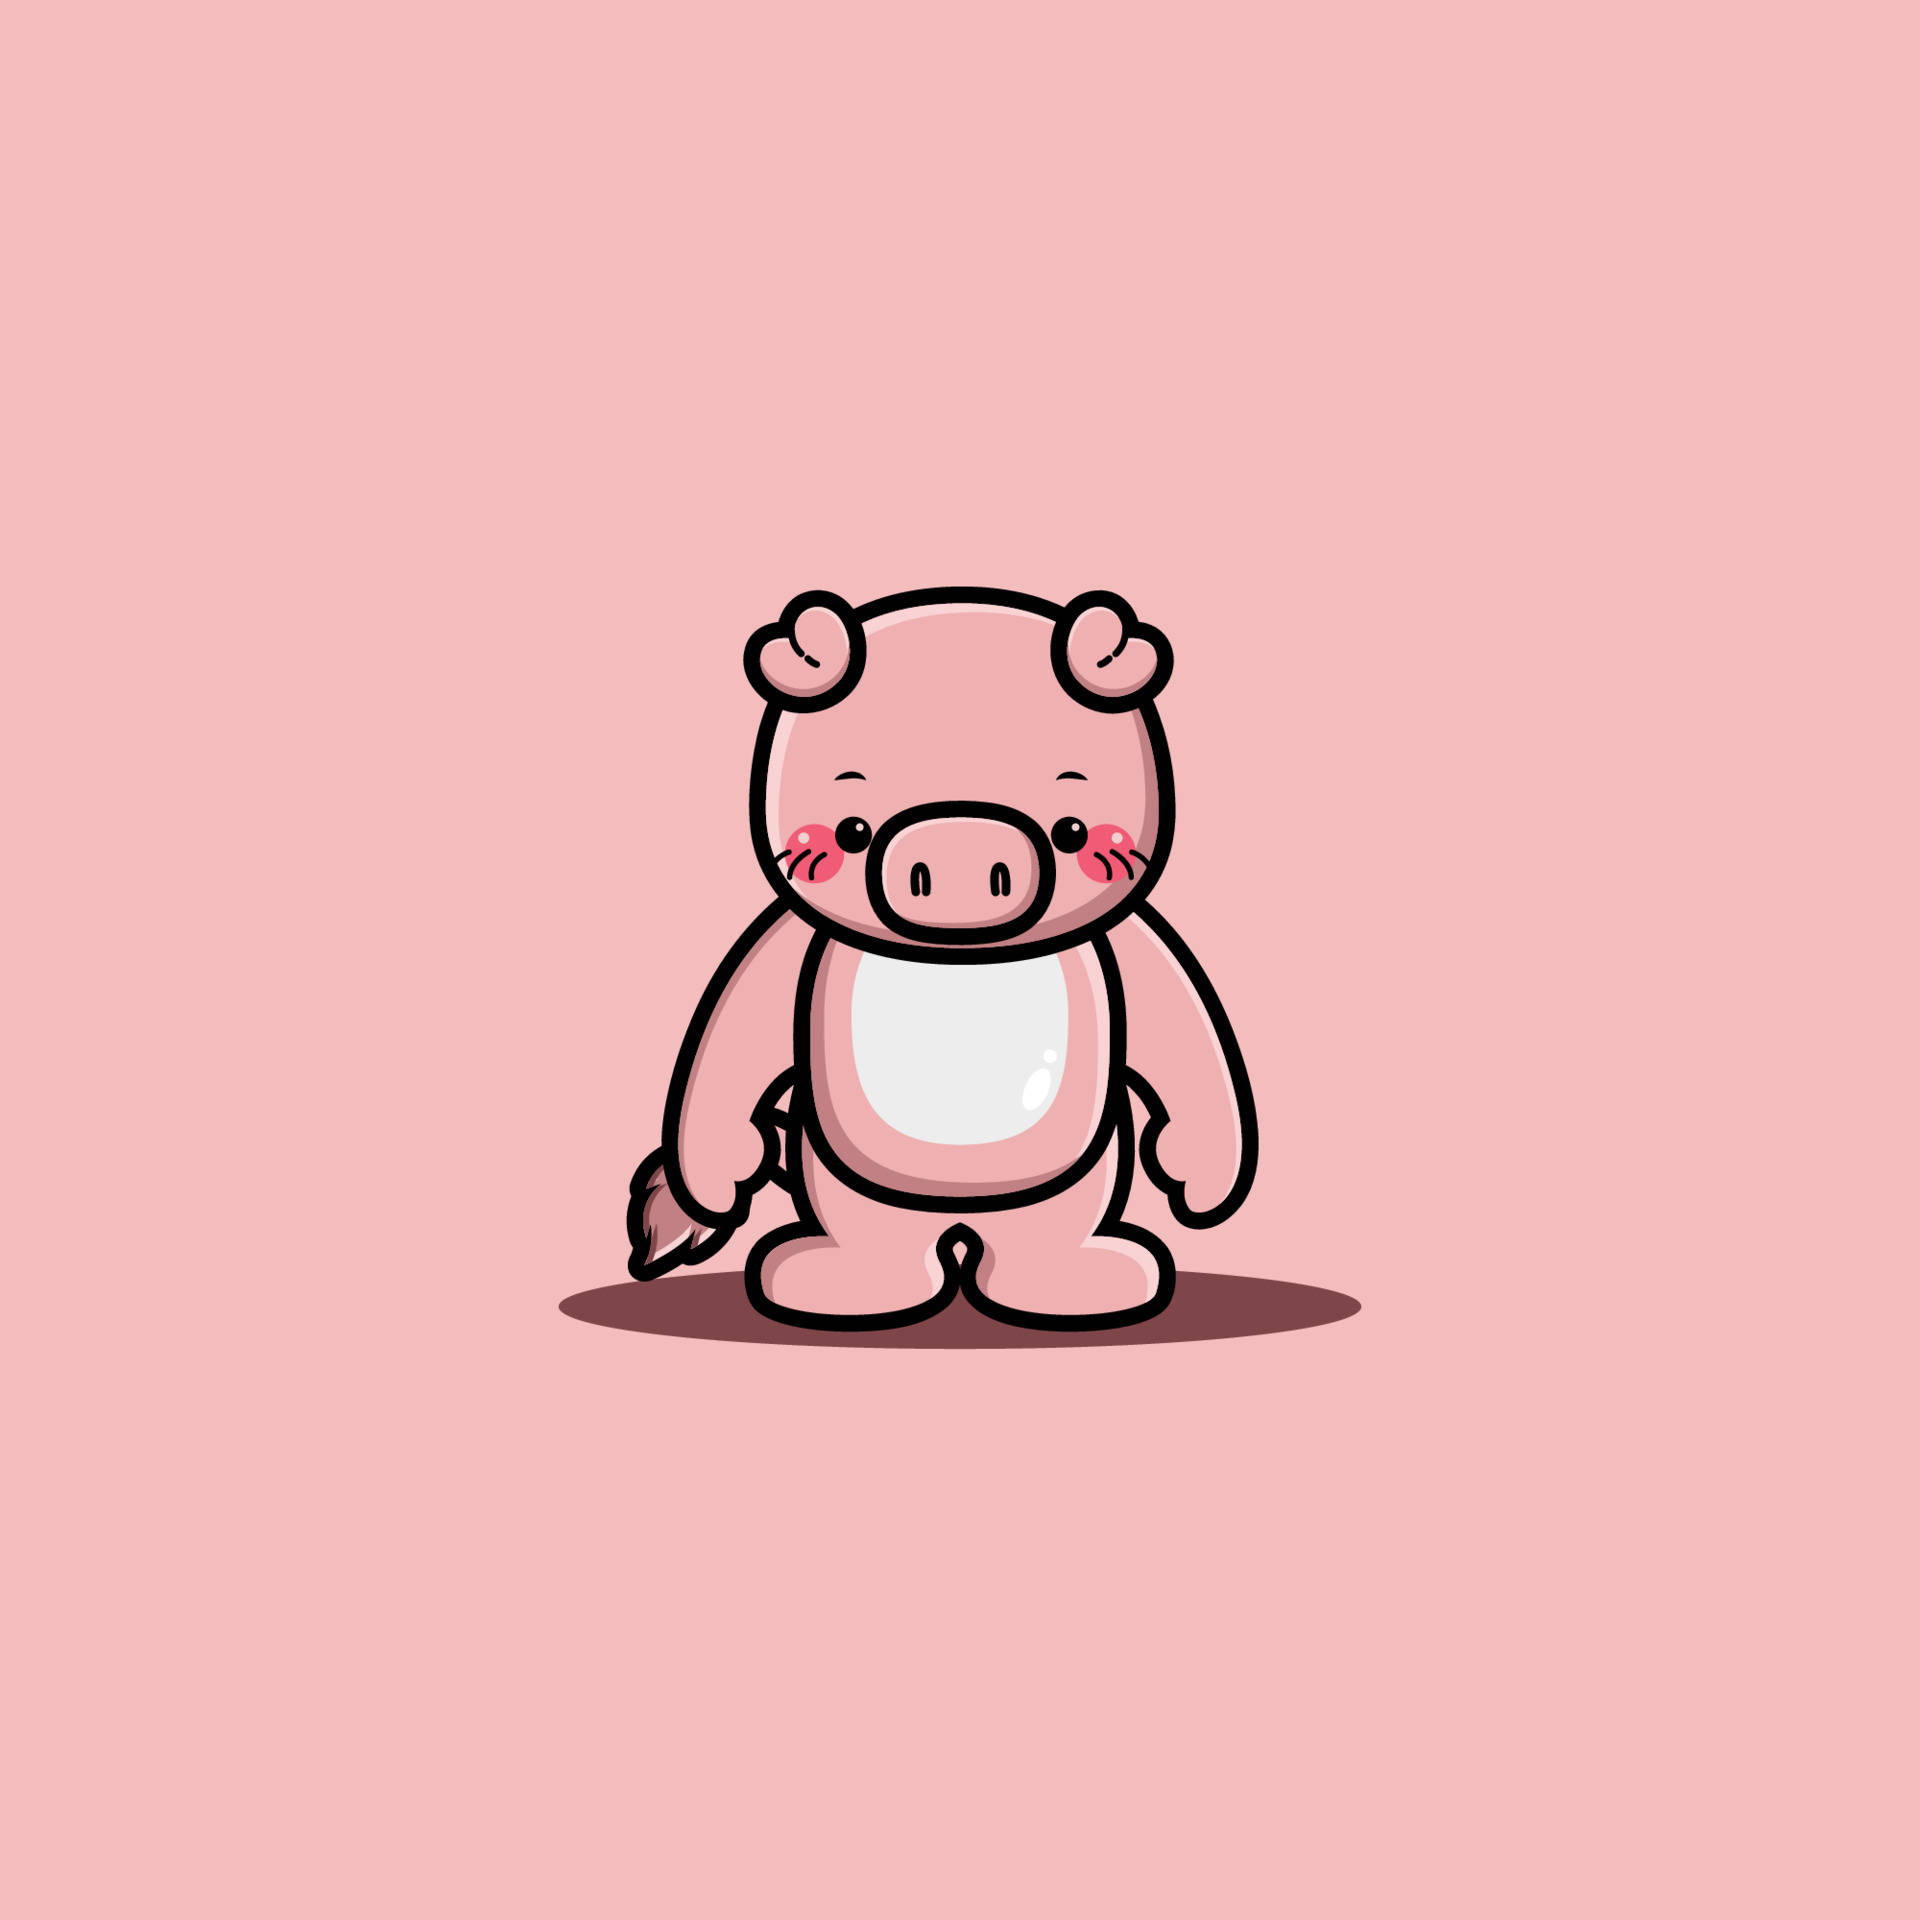 Cute Pig Vector Art Background